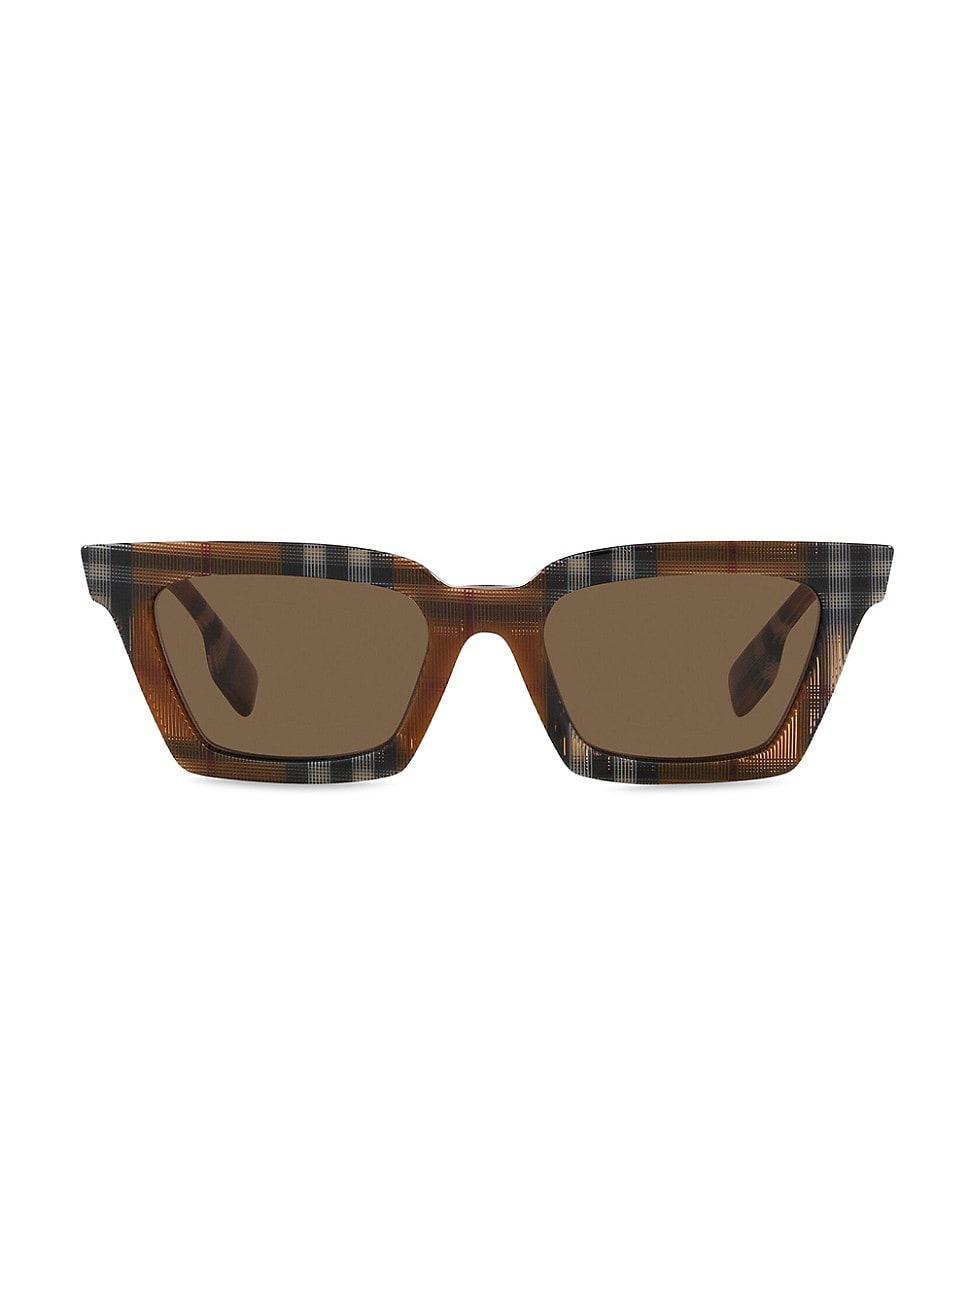 burberry Briar 52mm Square Sunglasses Product Image